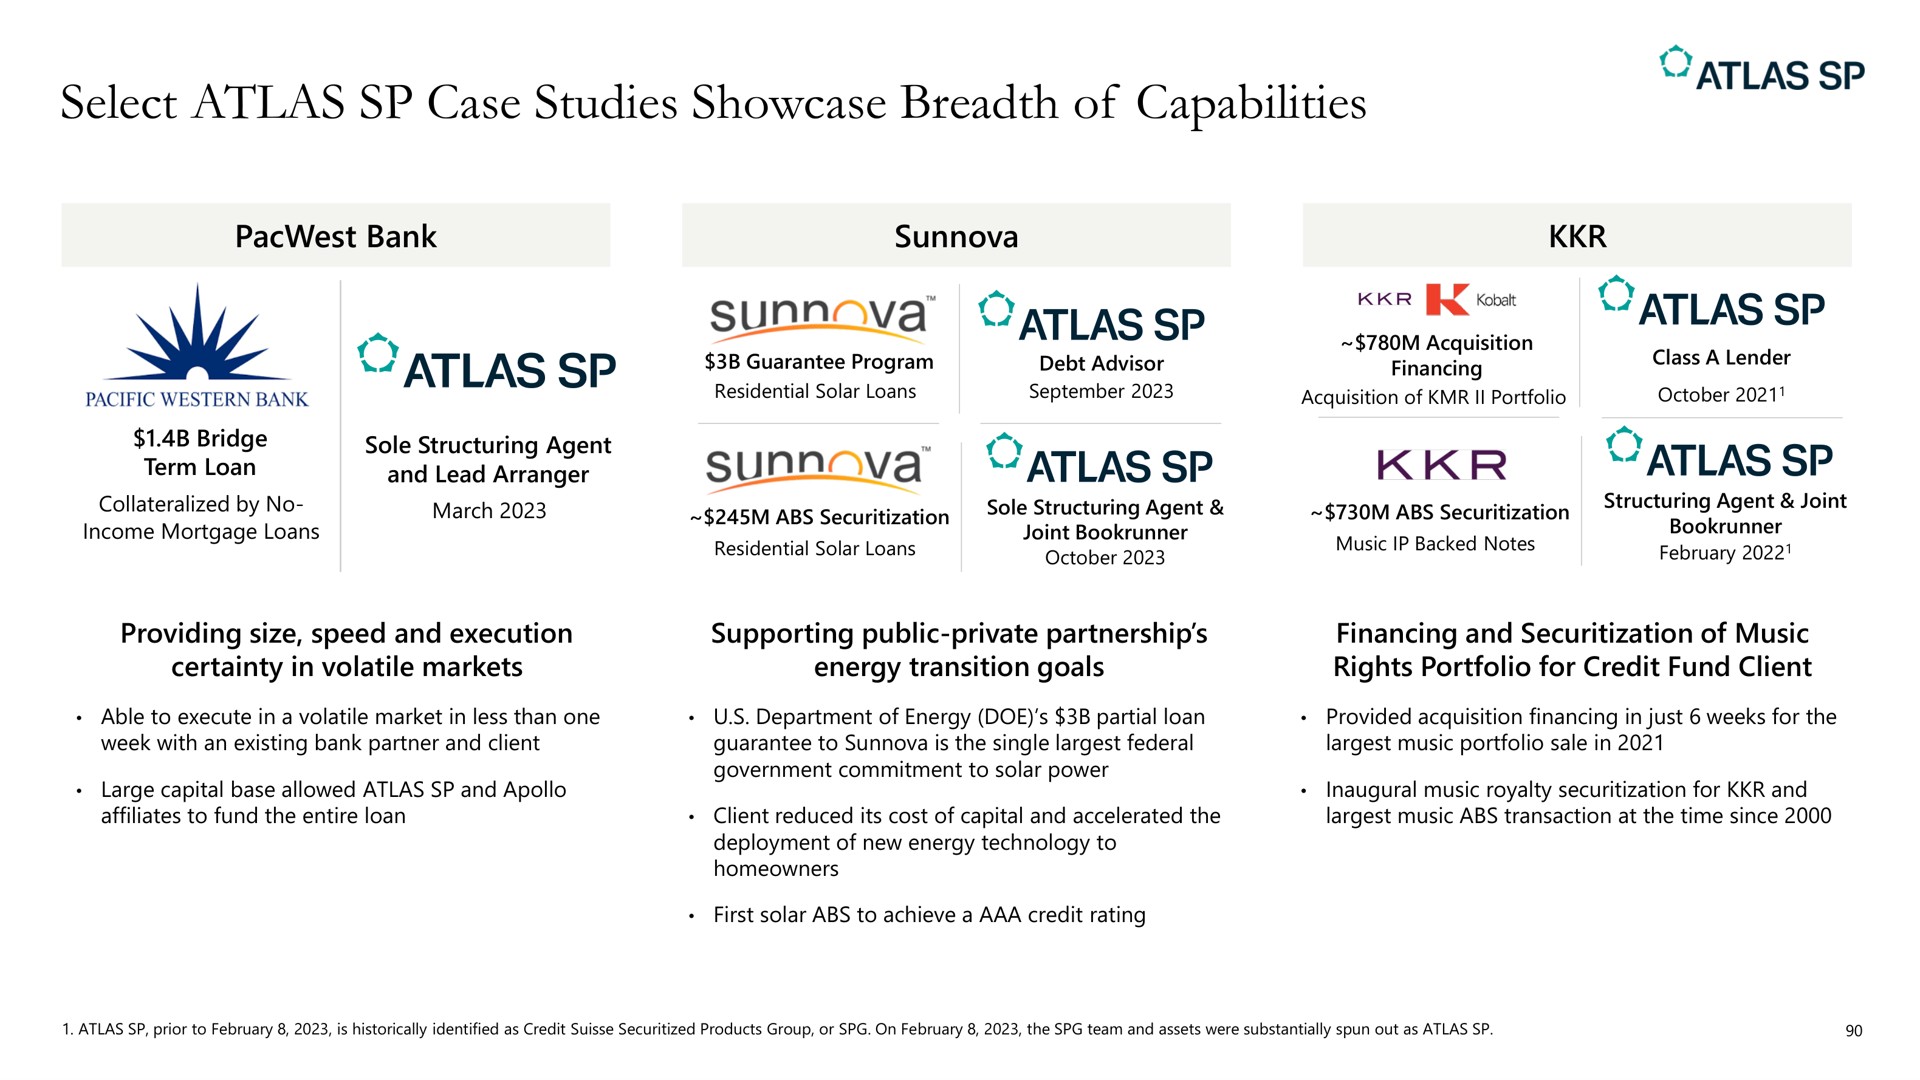 select atlas case studies showcase breadth of capabilities | Apollo Global Management